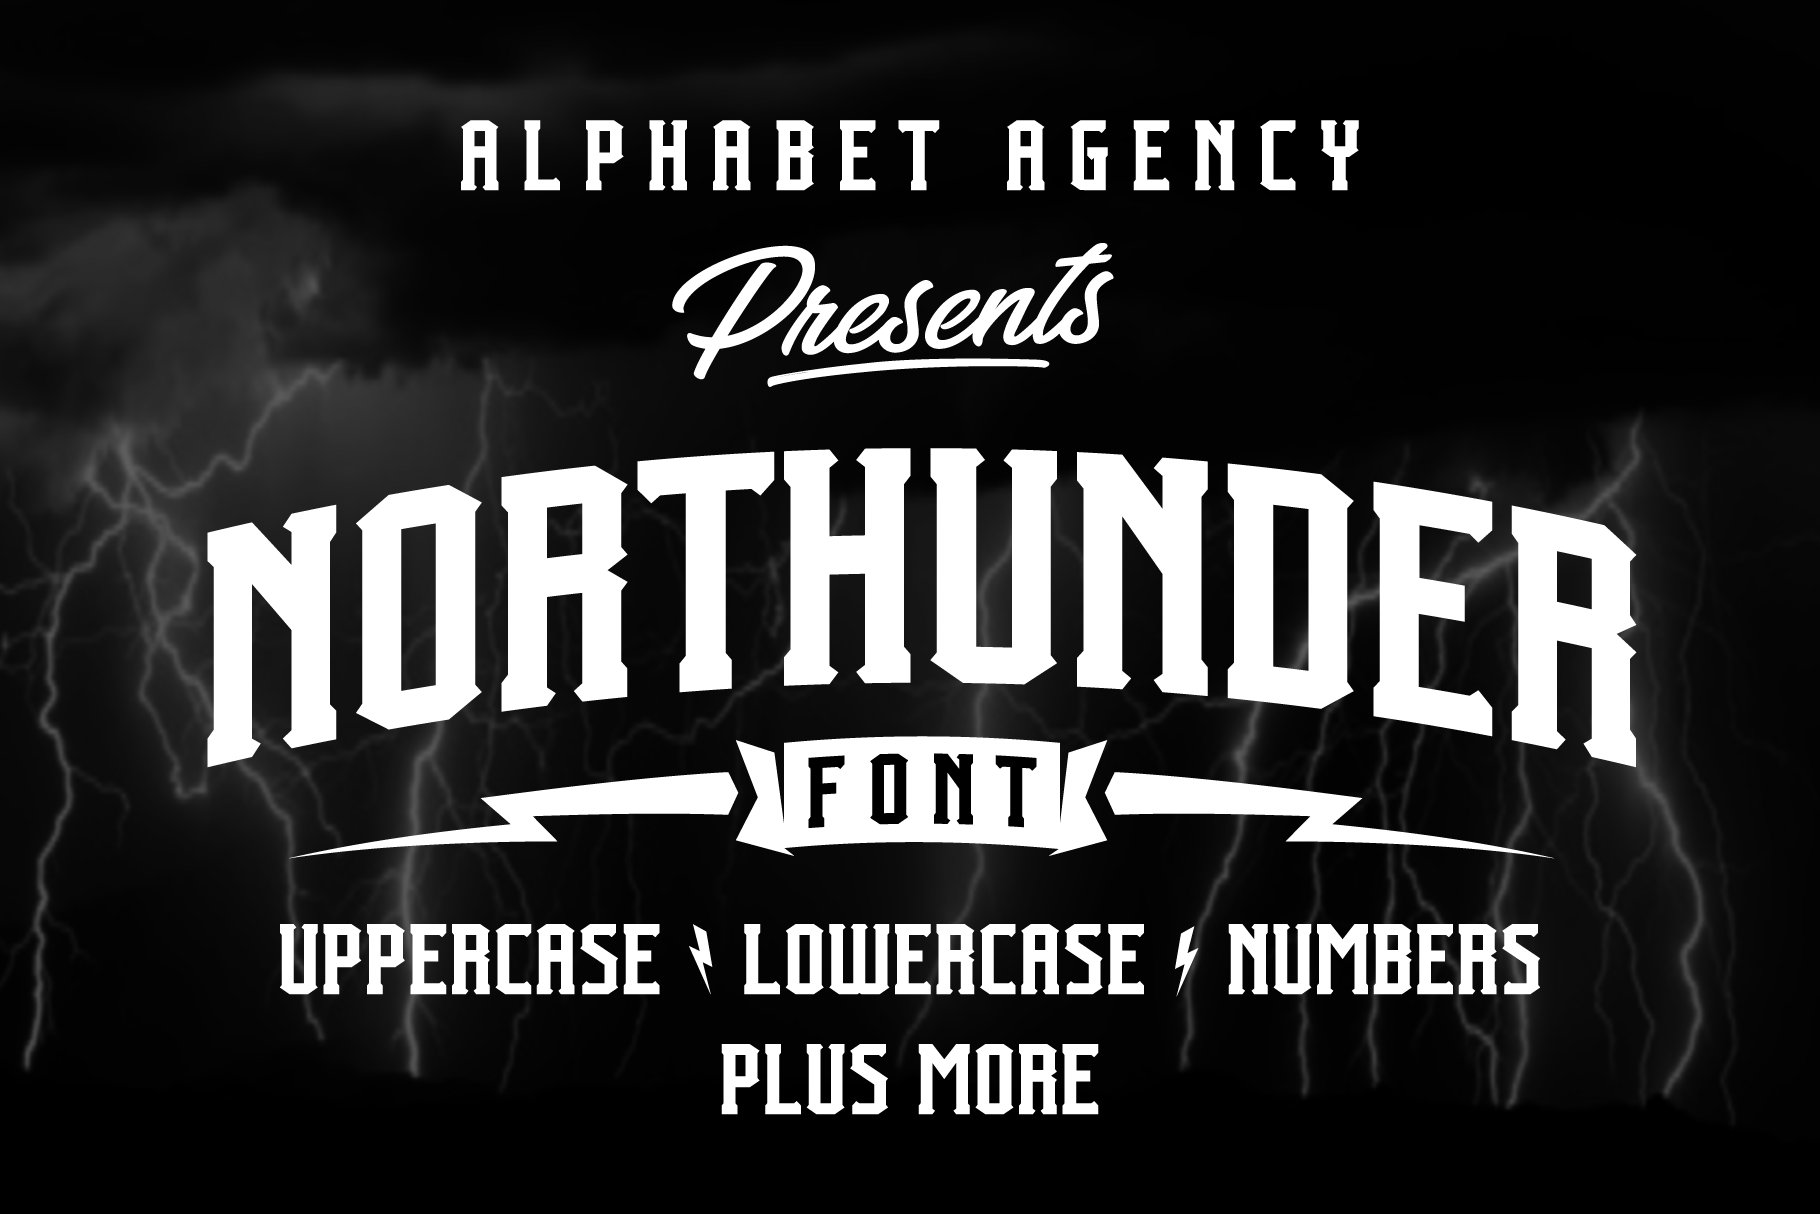 Northunder Font cover image.